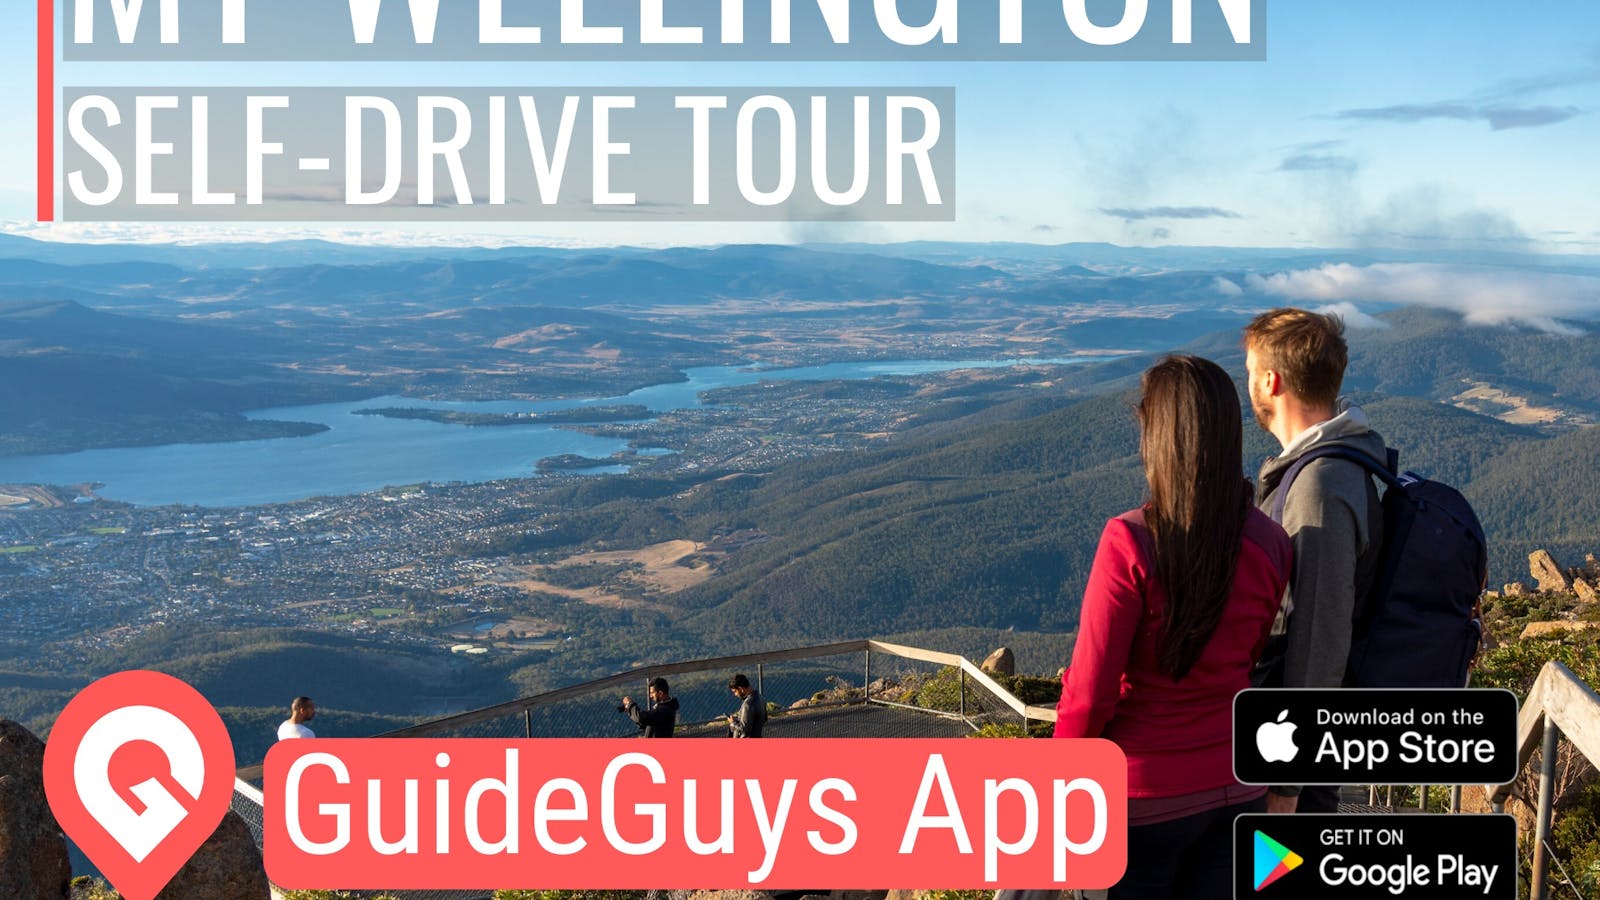 Mt Wellington Self Guided Tour App